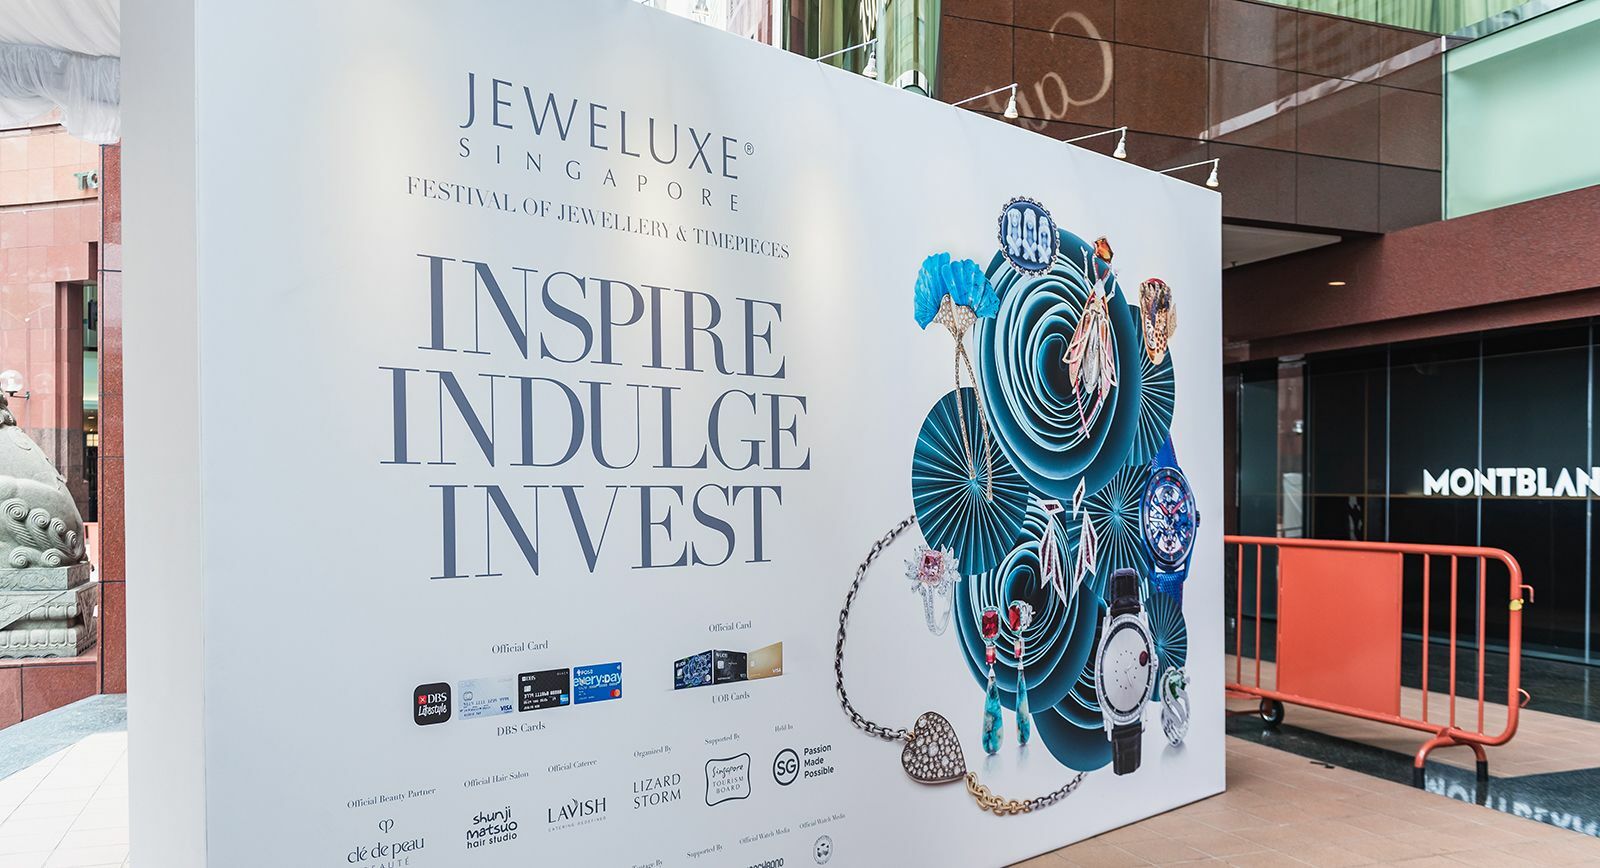 JeweLuxe Singapore 2020: An innovative type of jewellery exhibit 